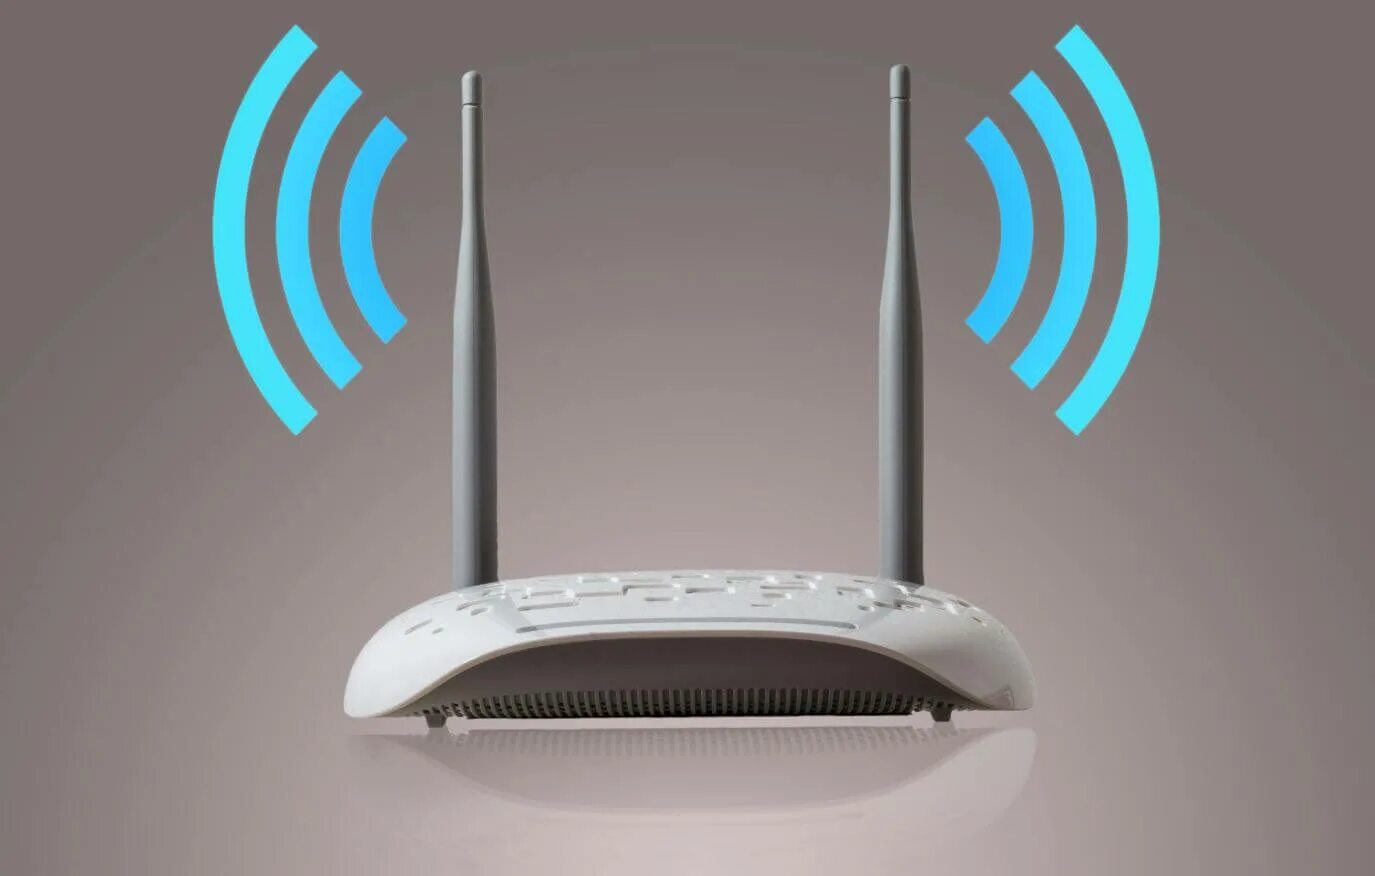 Wireless connection. Повторитель сигнала Wi-Fi. WIFI роутер 5g. Роутер со съемной антенной WIFI. Усилитель WIFI сигнала.